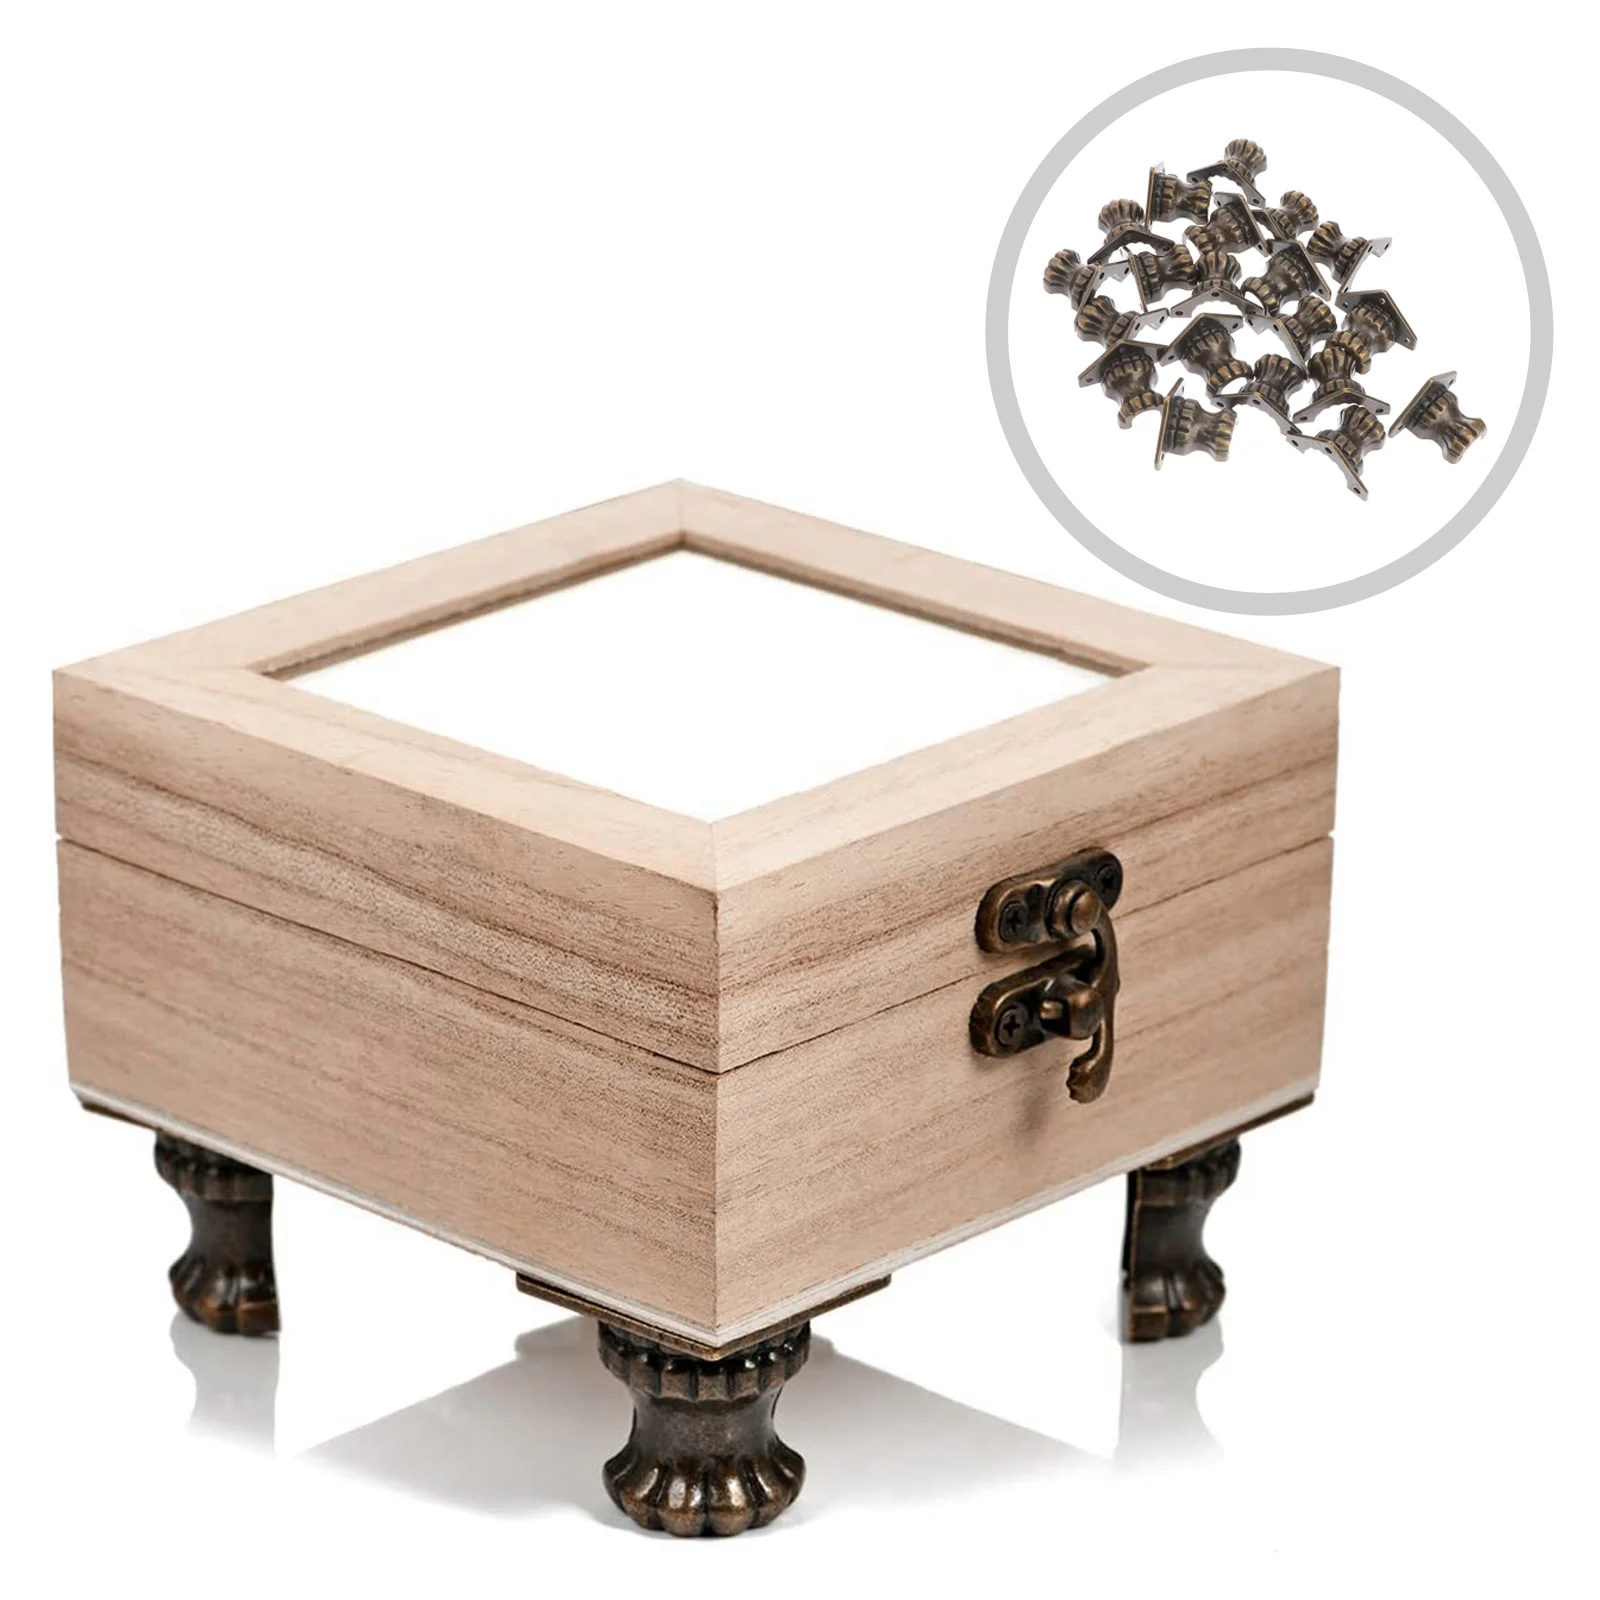 

20 Pcs Metal Corner Trim Wooden Box Support Feet Jewelry Case Decorate 2.5X2.5X2CM Decorative Legs Cornet Protector Storage